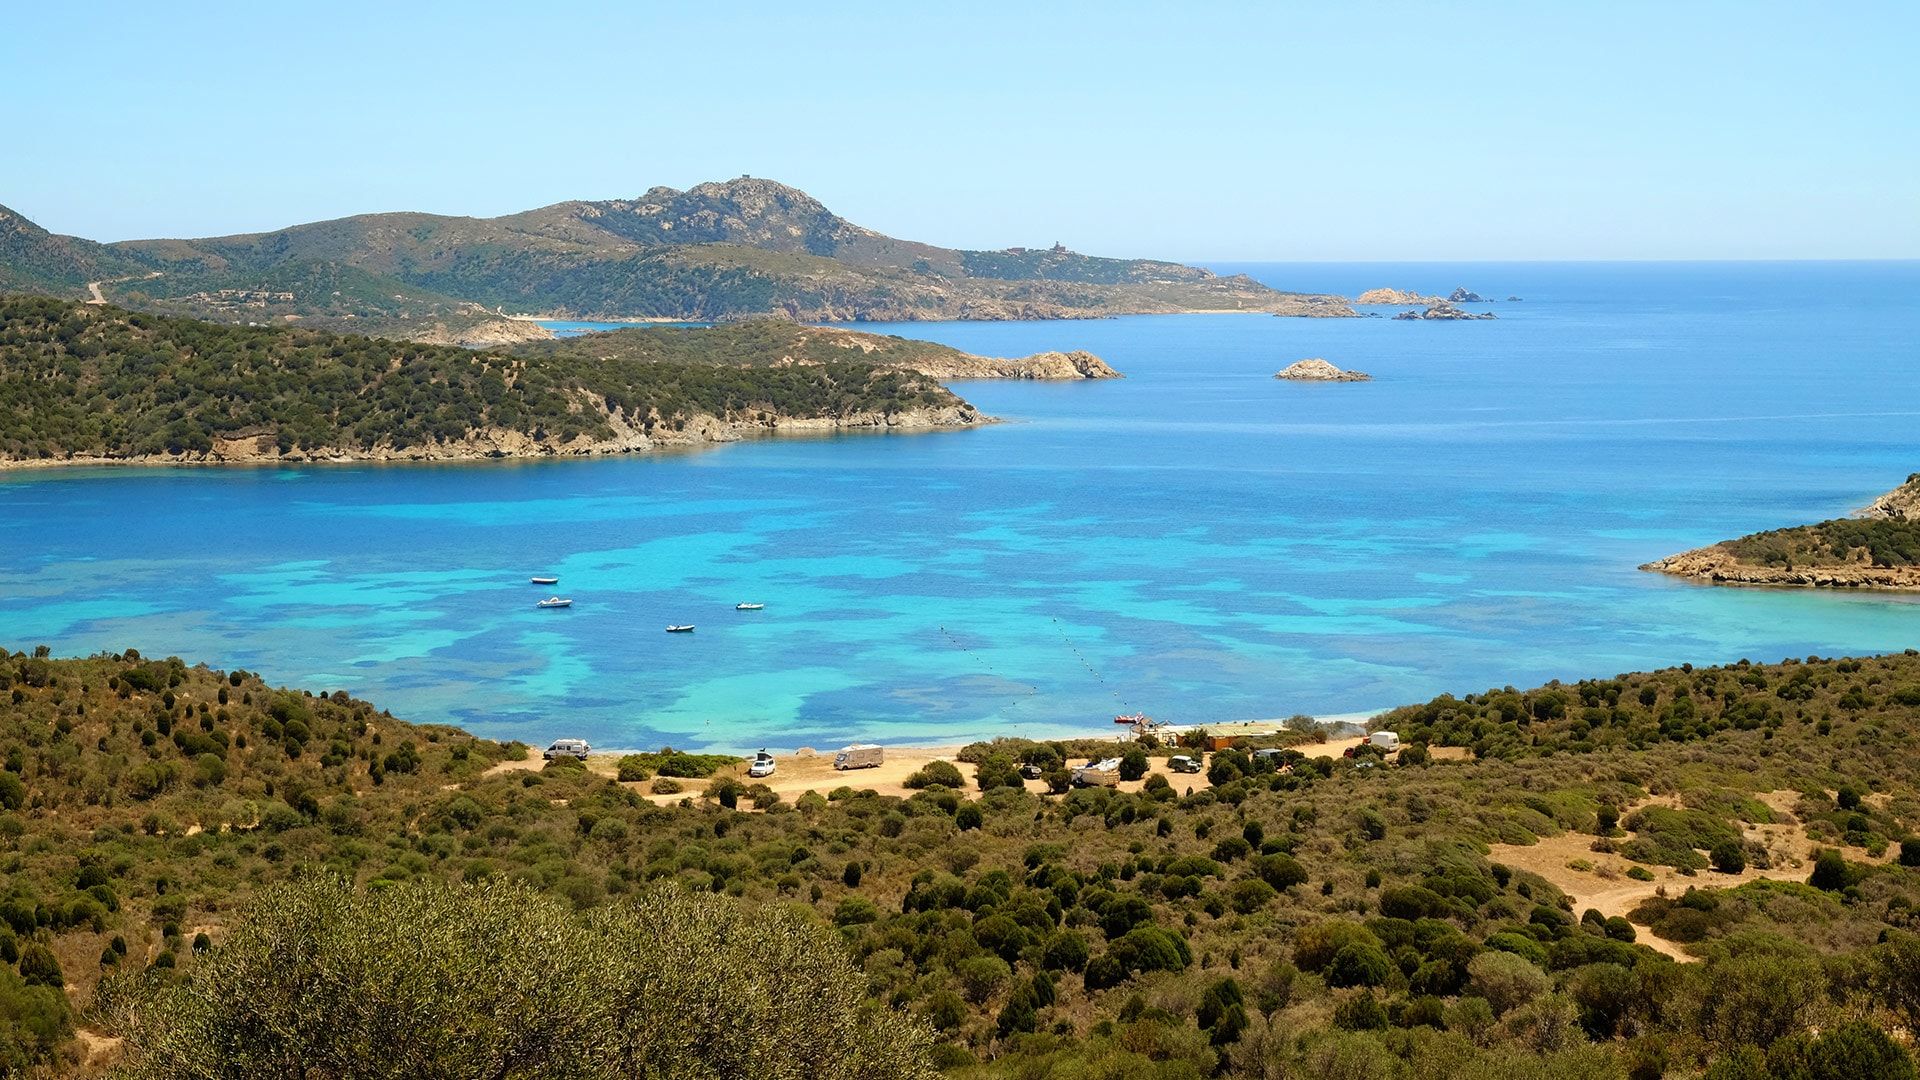 Coasting through a Dream: The Beaches of Southern Sardinia